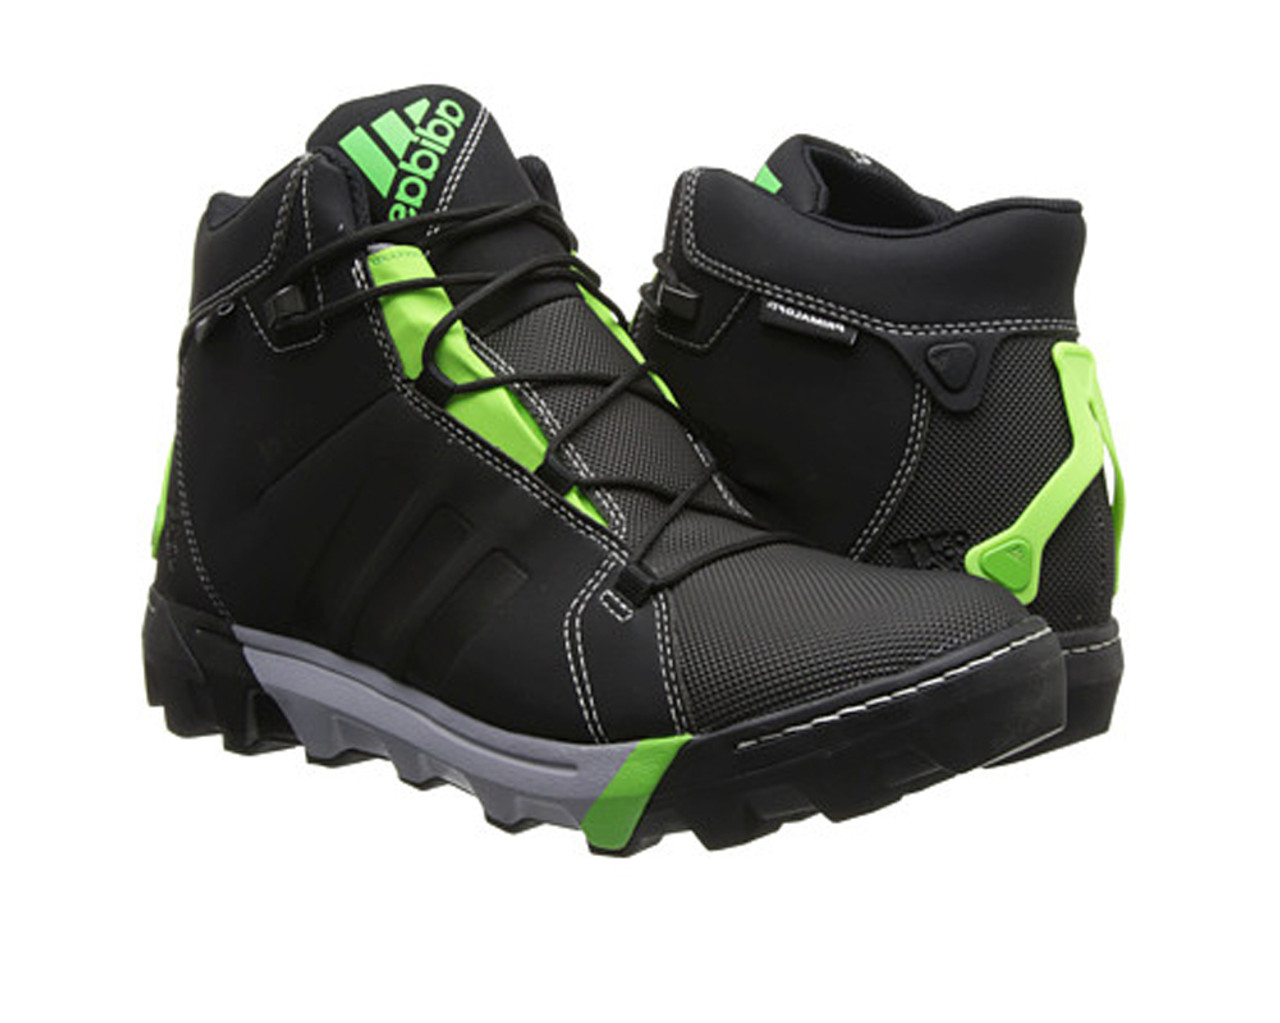 Adidas Men's Slopecruiser CP Snow Hiker - Black | Discount Adidas Athletic Shoes & - Shoolu.com Shoolu.com